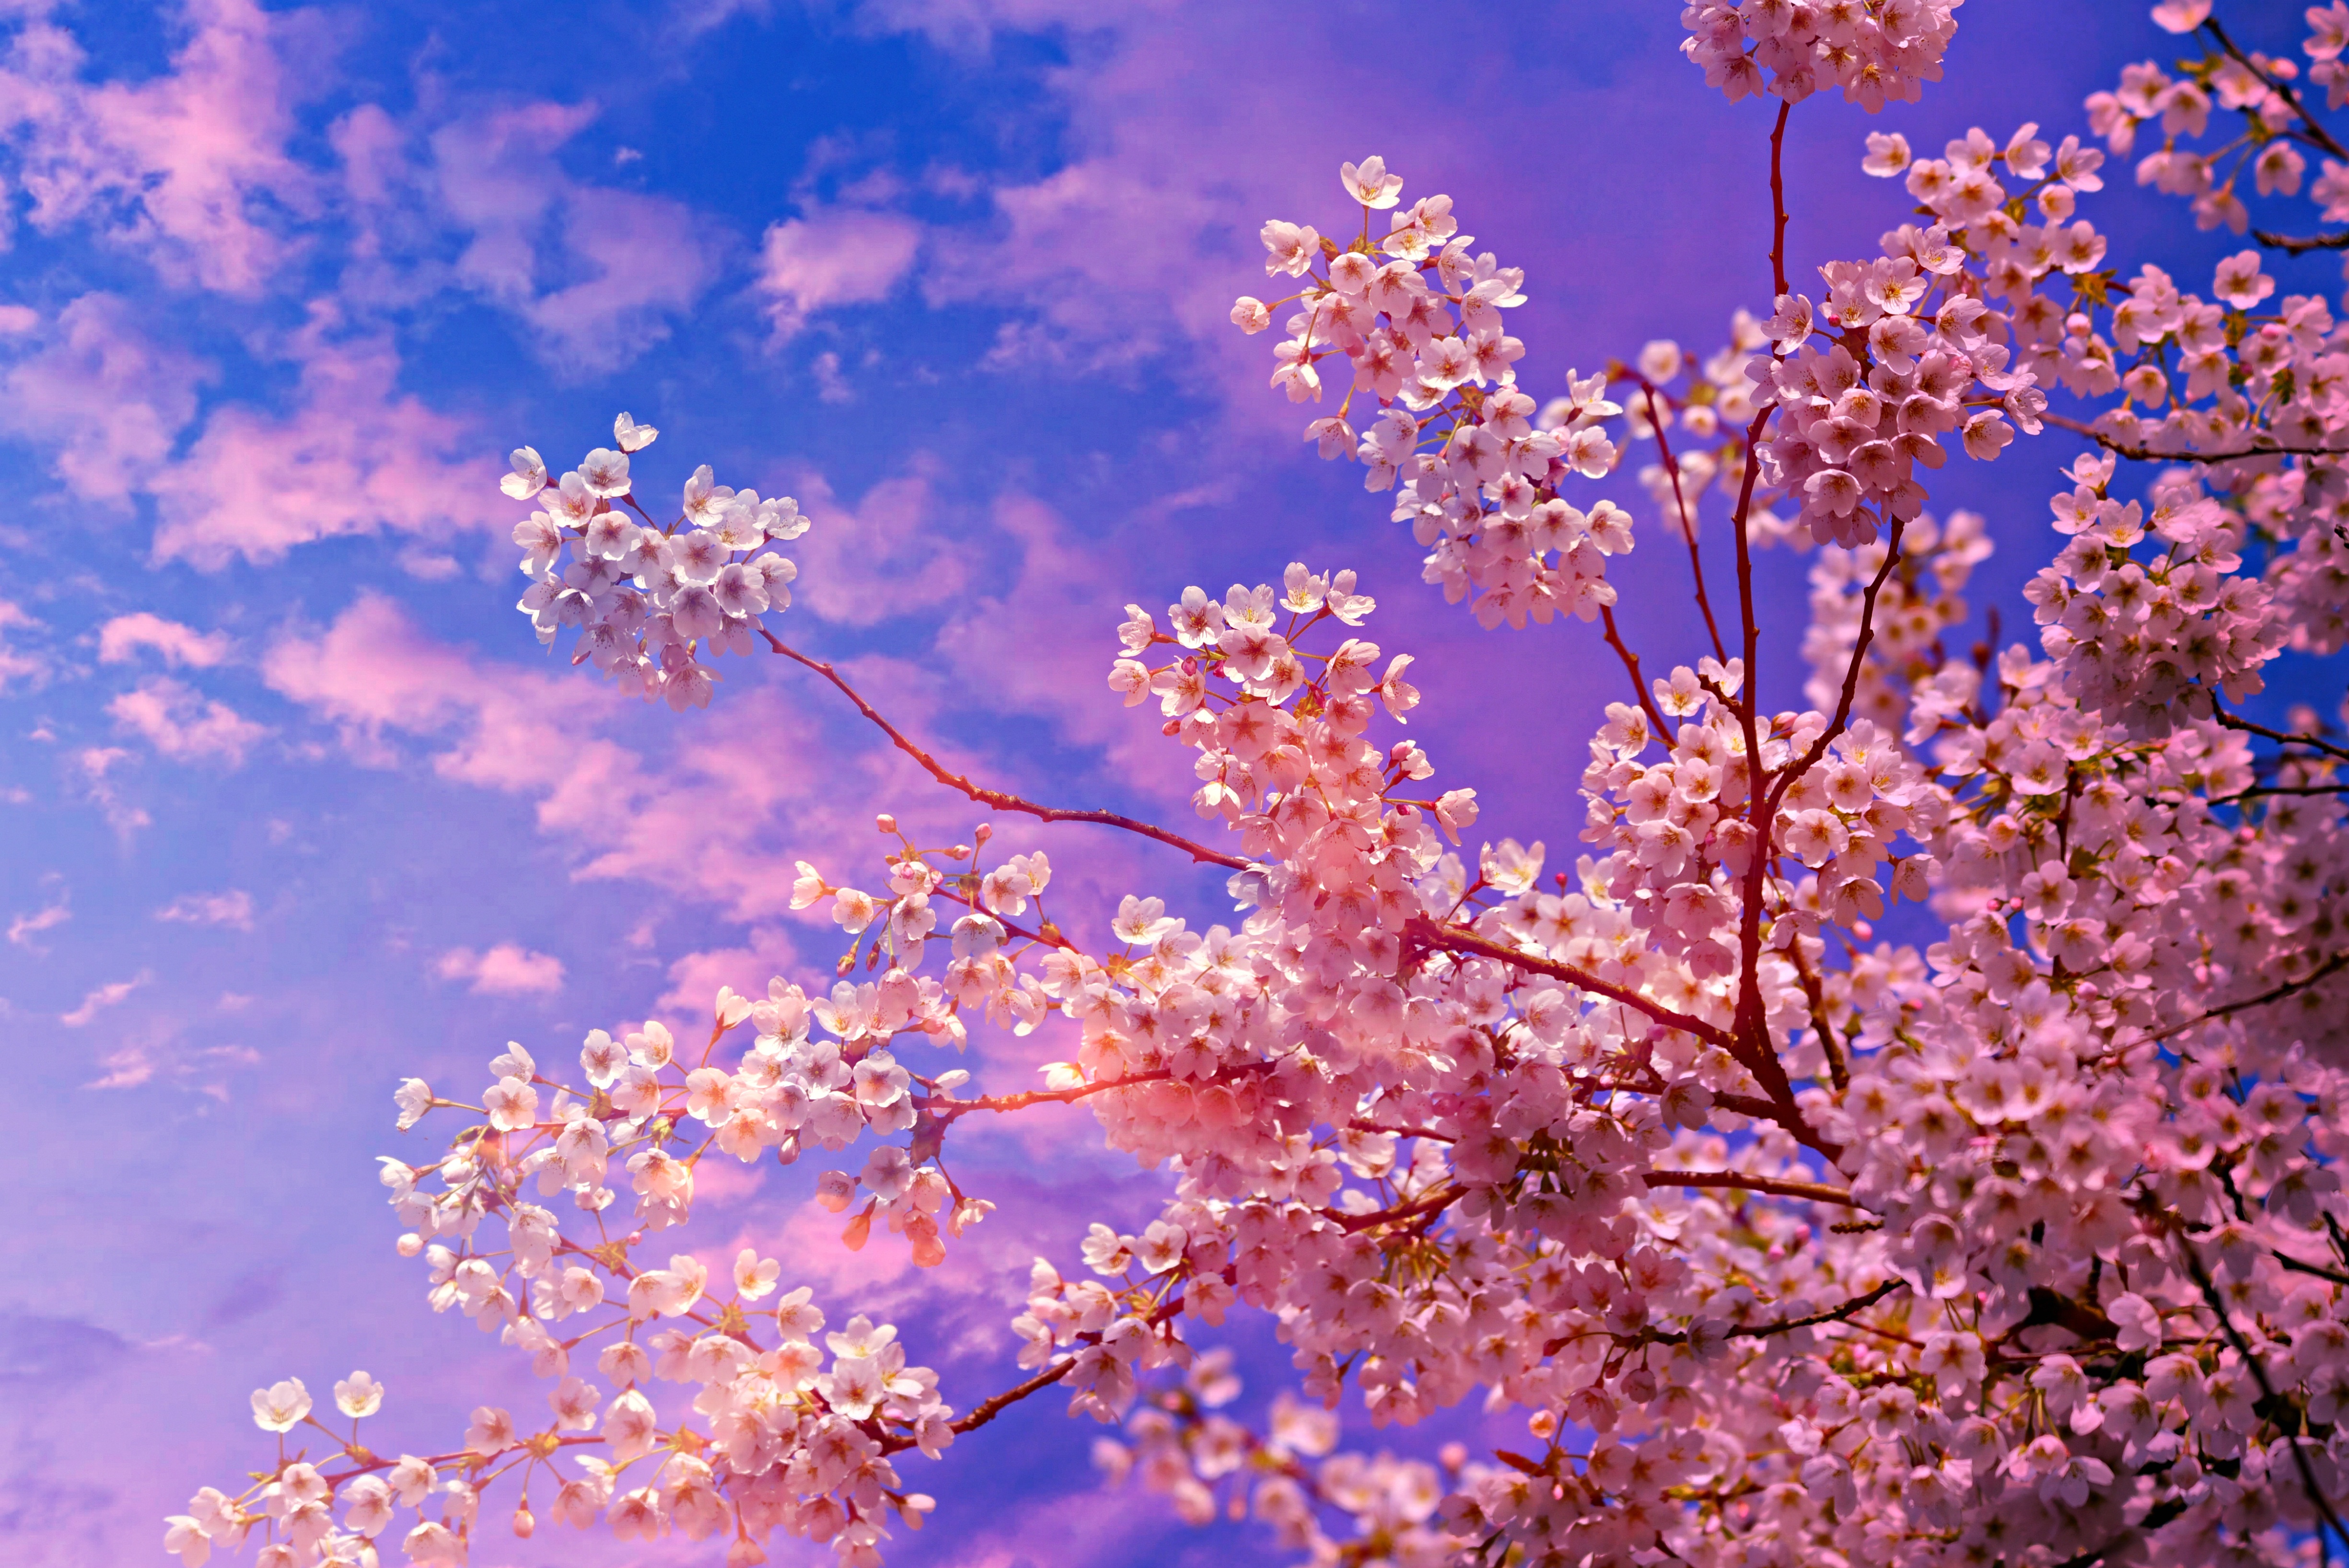 Aesthetic Anime Cherry Blossom Wallpaper 4K Among the cherry blossoms